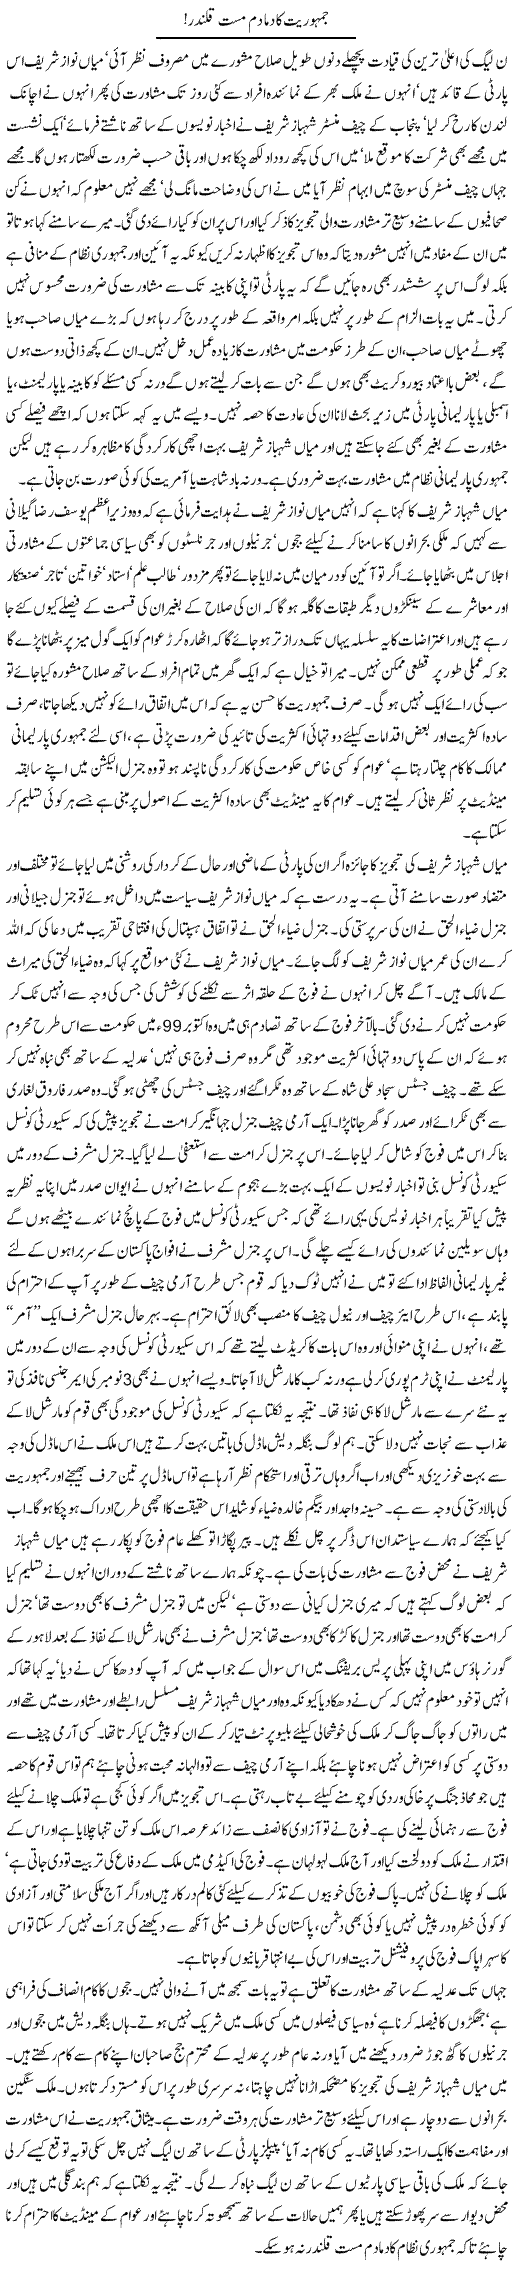 Shahbaz Sharif Express Column Asadullah Ghalib 11 March 2011